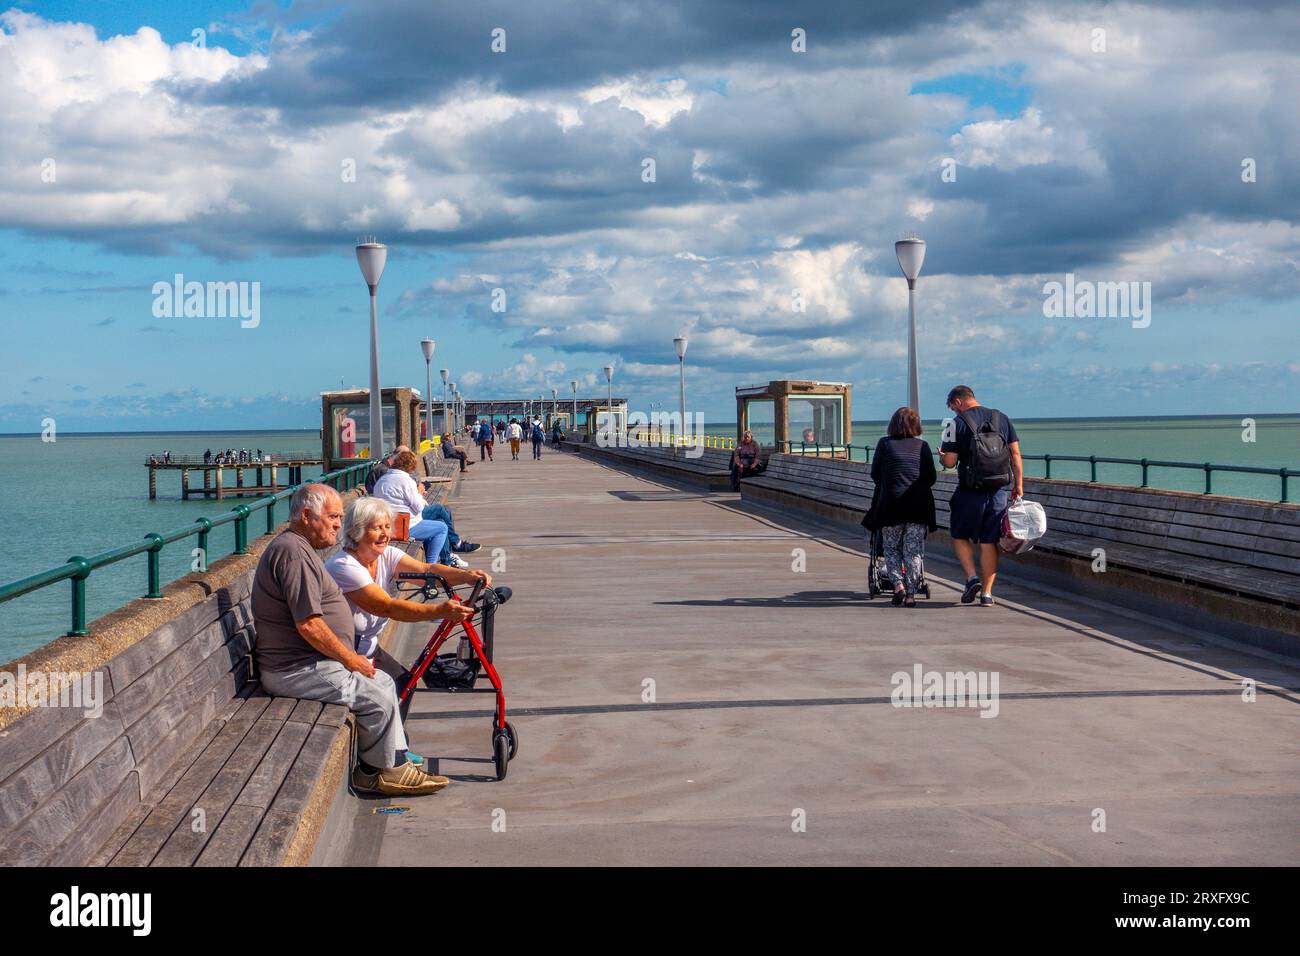 Deal,Pier,Sunshine,People,Relaxing,Sunshine,blue sky,clouds,Deal,Kent,England Stock Photo